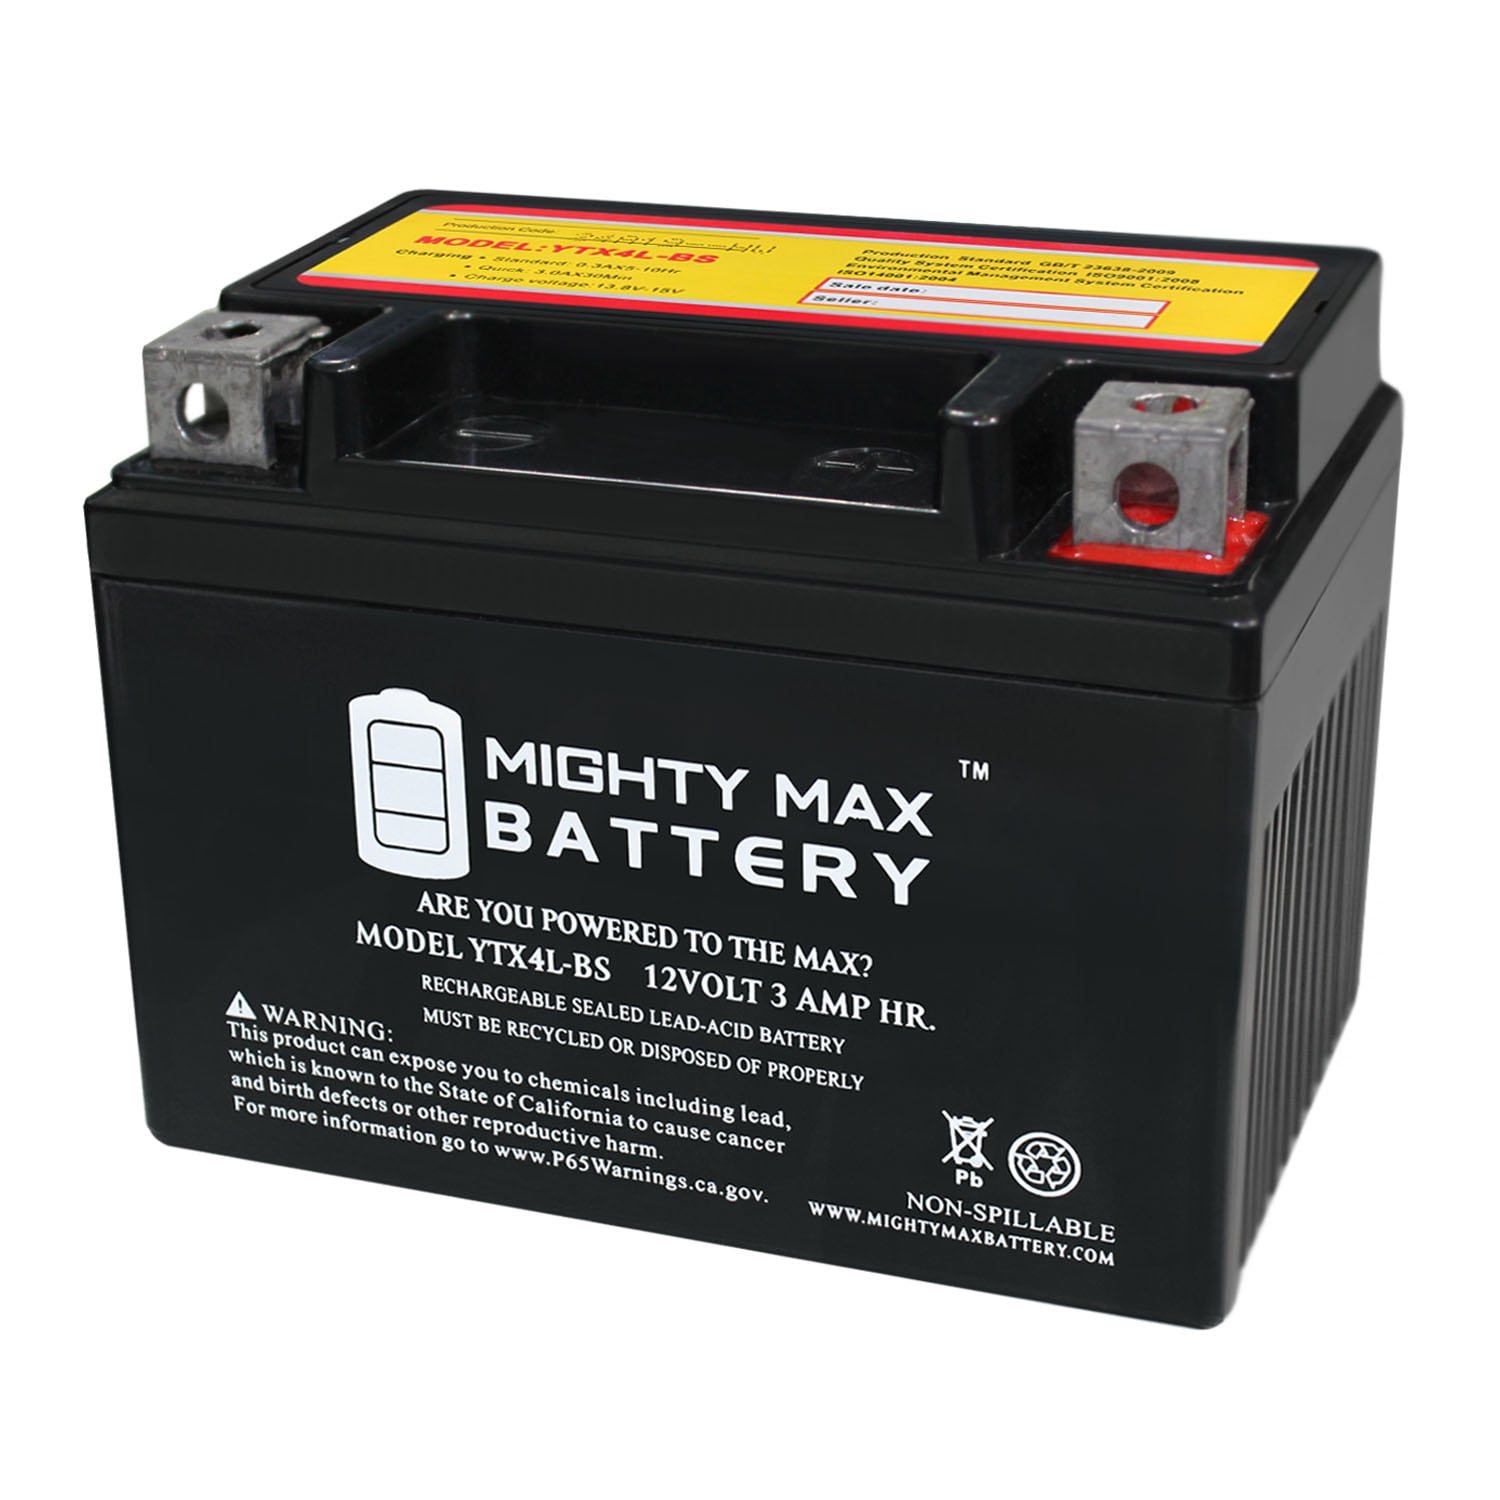 Batterie BS Battery Quad TGB 550 Blade Irs 2008-2011 YTX20L-BS - 12V 18Ah  Neuf - Cdiscount Auto